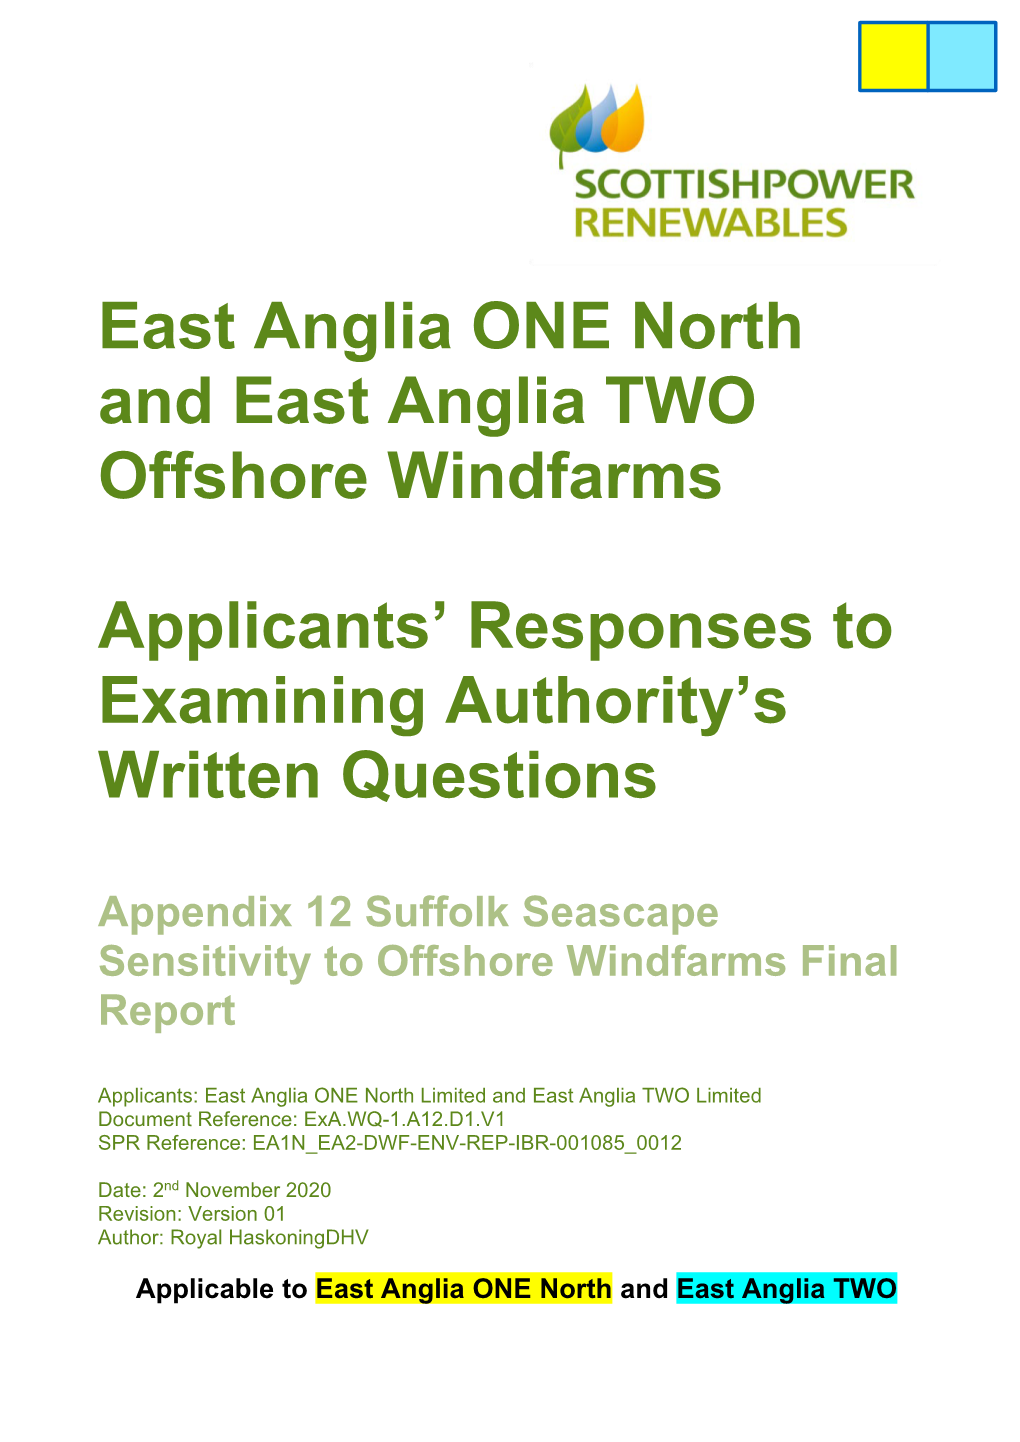 Appendix 12 Suffolk Seascape Sensitivity to Offshore Windfarms Final Report